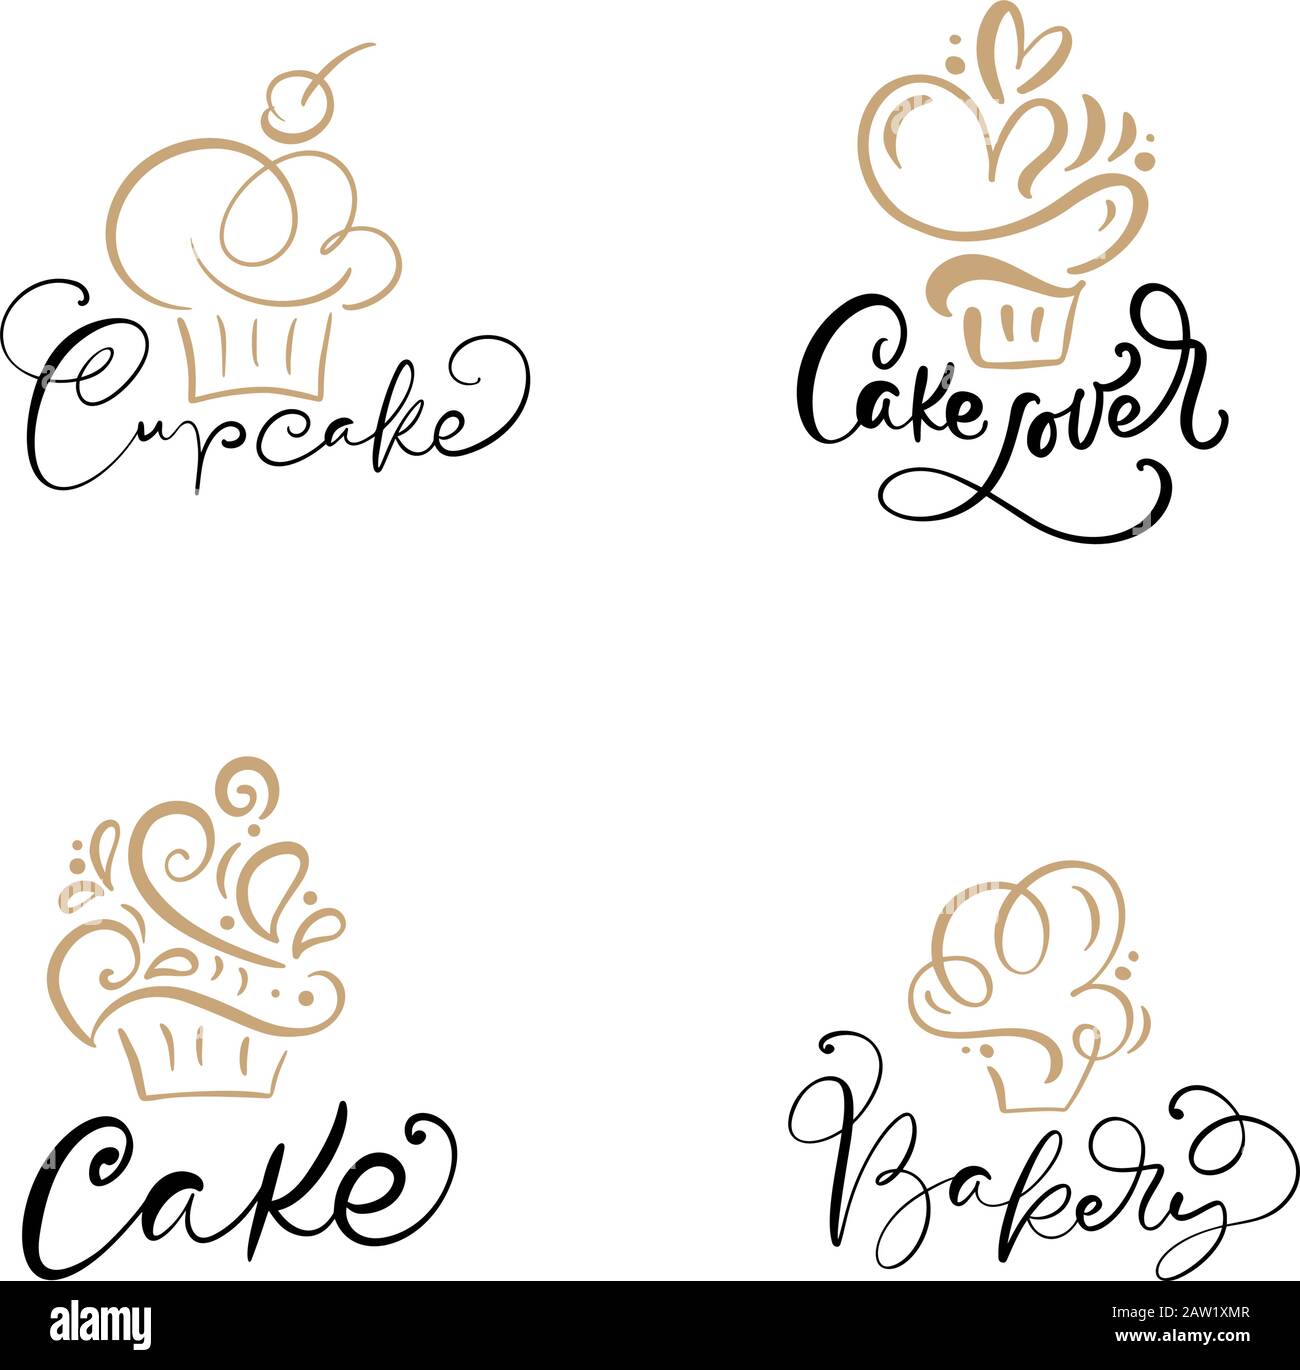 Sweet Hearts Candy Font - Design Cuts